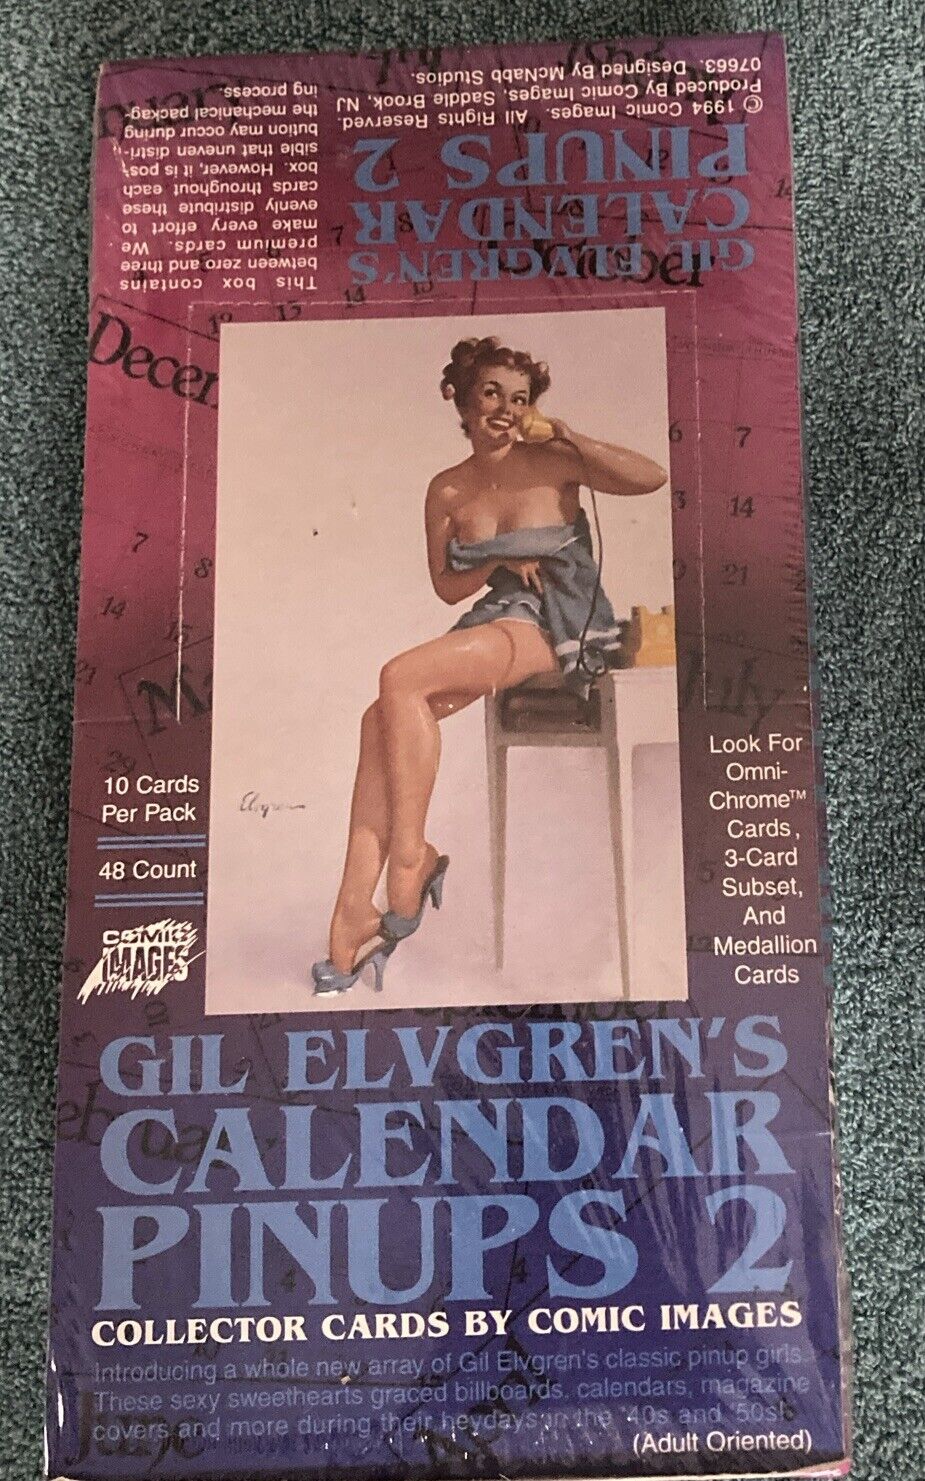 1994 Comic Images Gil Elvgren\'s Calendar Pinups 2 Collector Cards Box - Sealed